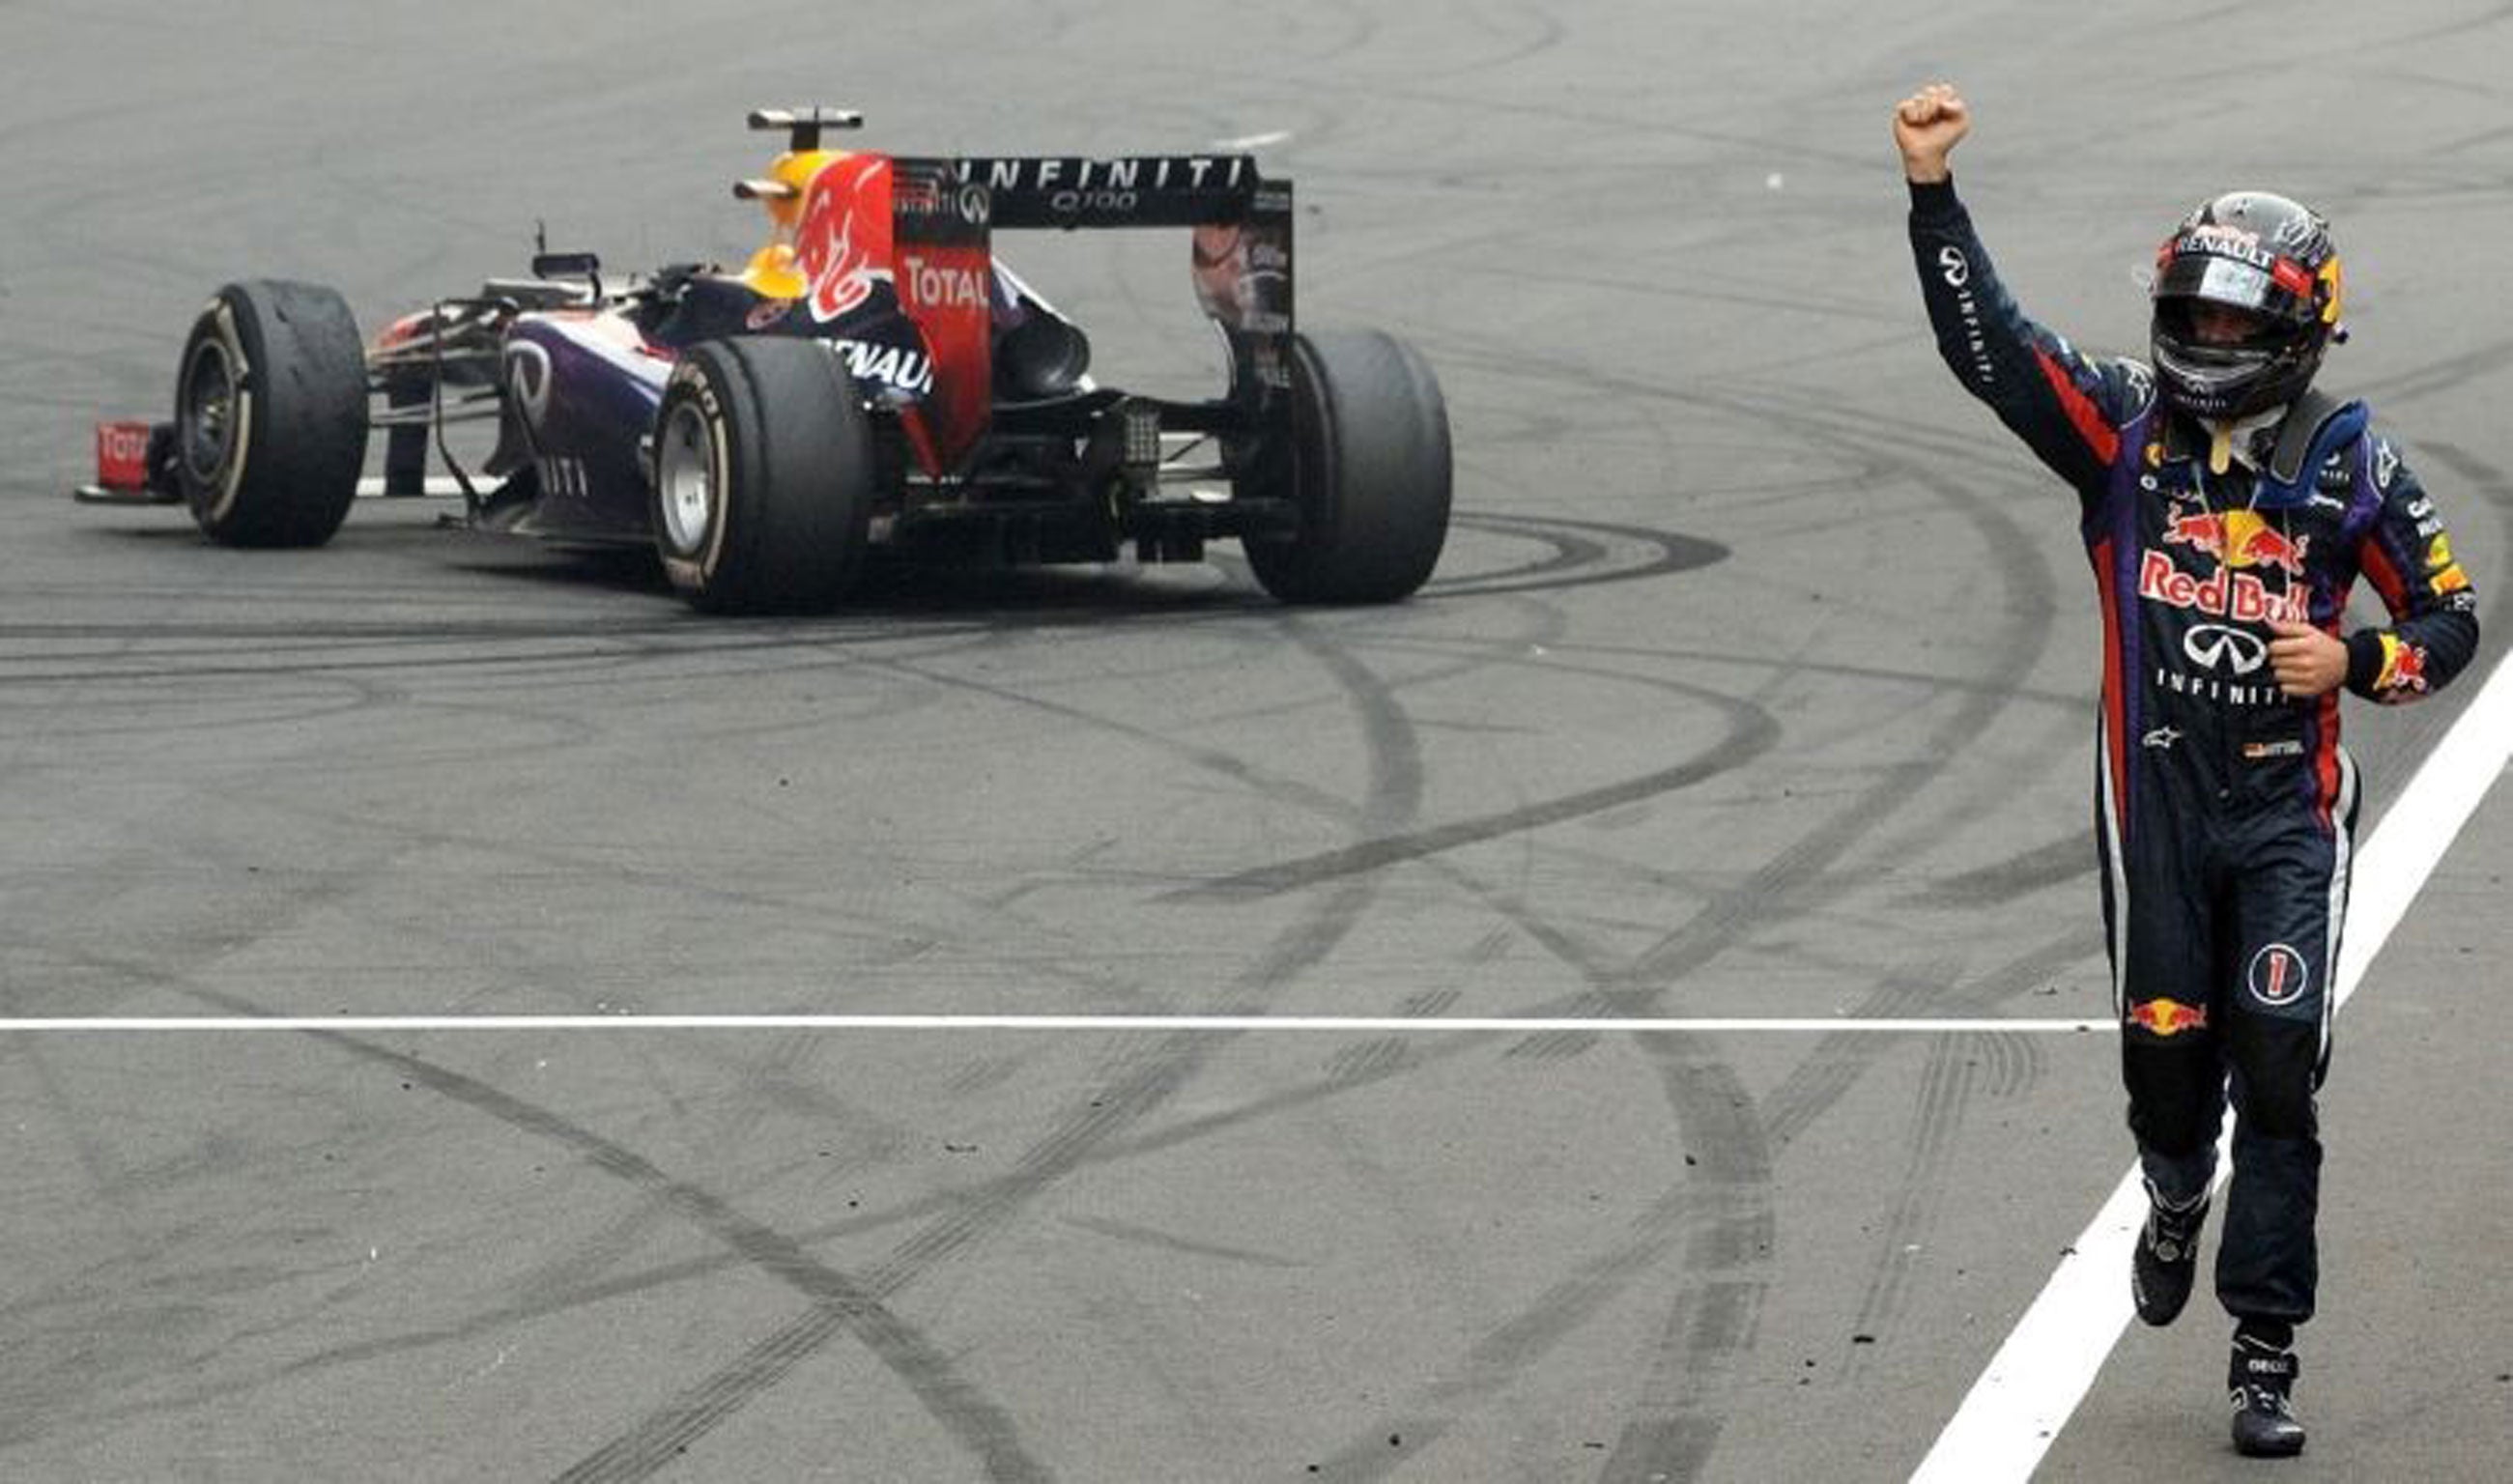 Red Bull driver Sebastian Vettel of Germany celebrates after winning the Formula One Indian Grand Prix 2013